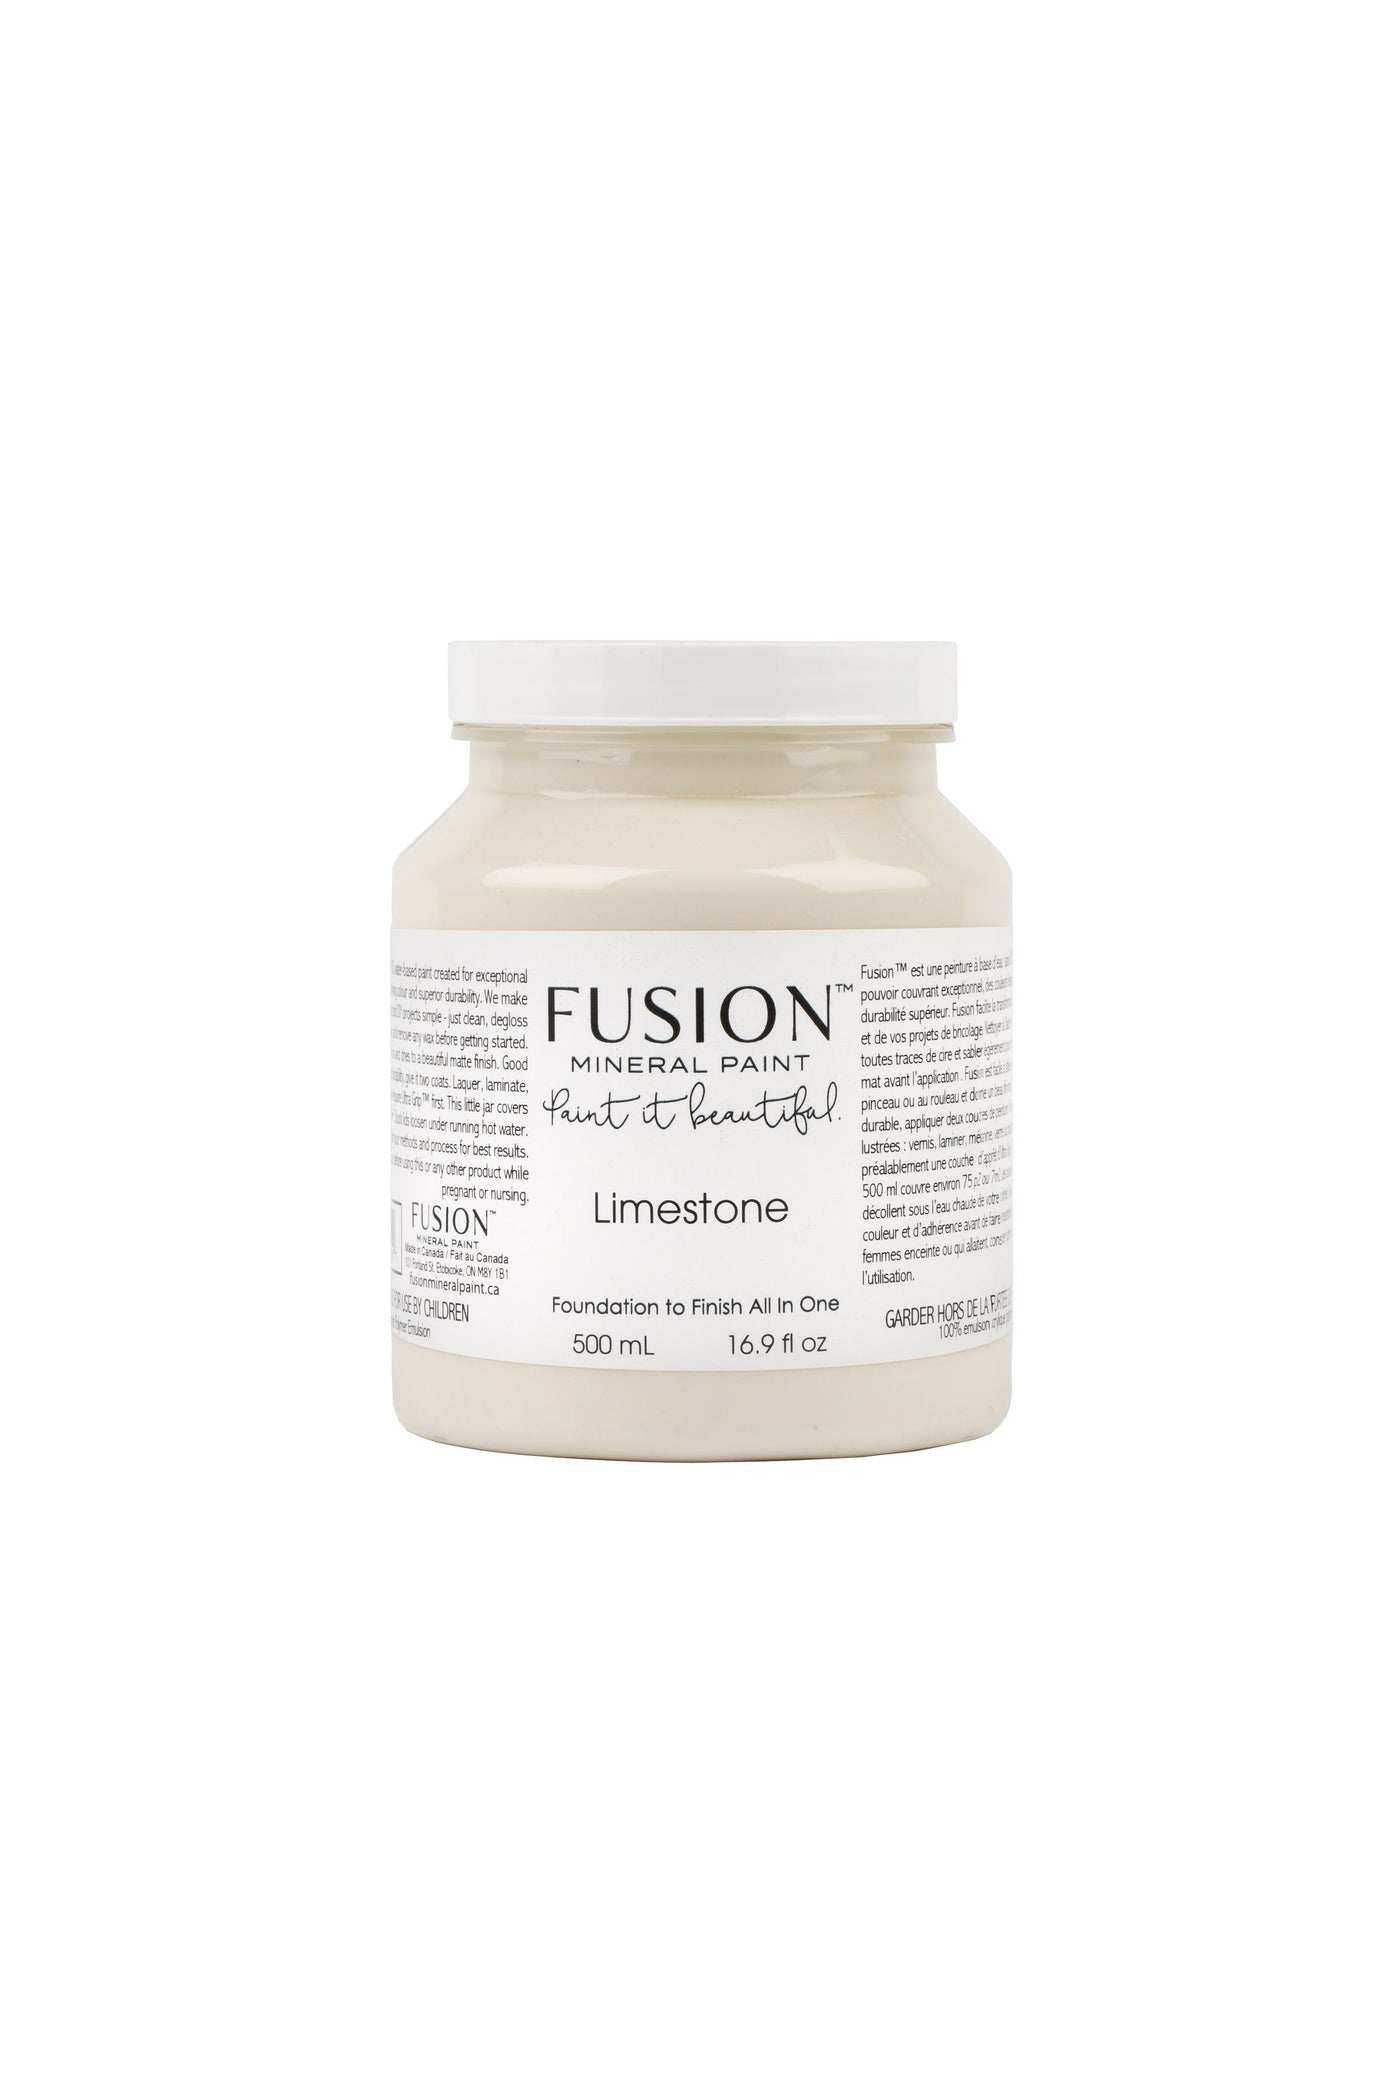 Fusion Mineral Paint - LIMESTONE warm creamy off-white 500ml